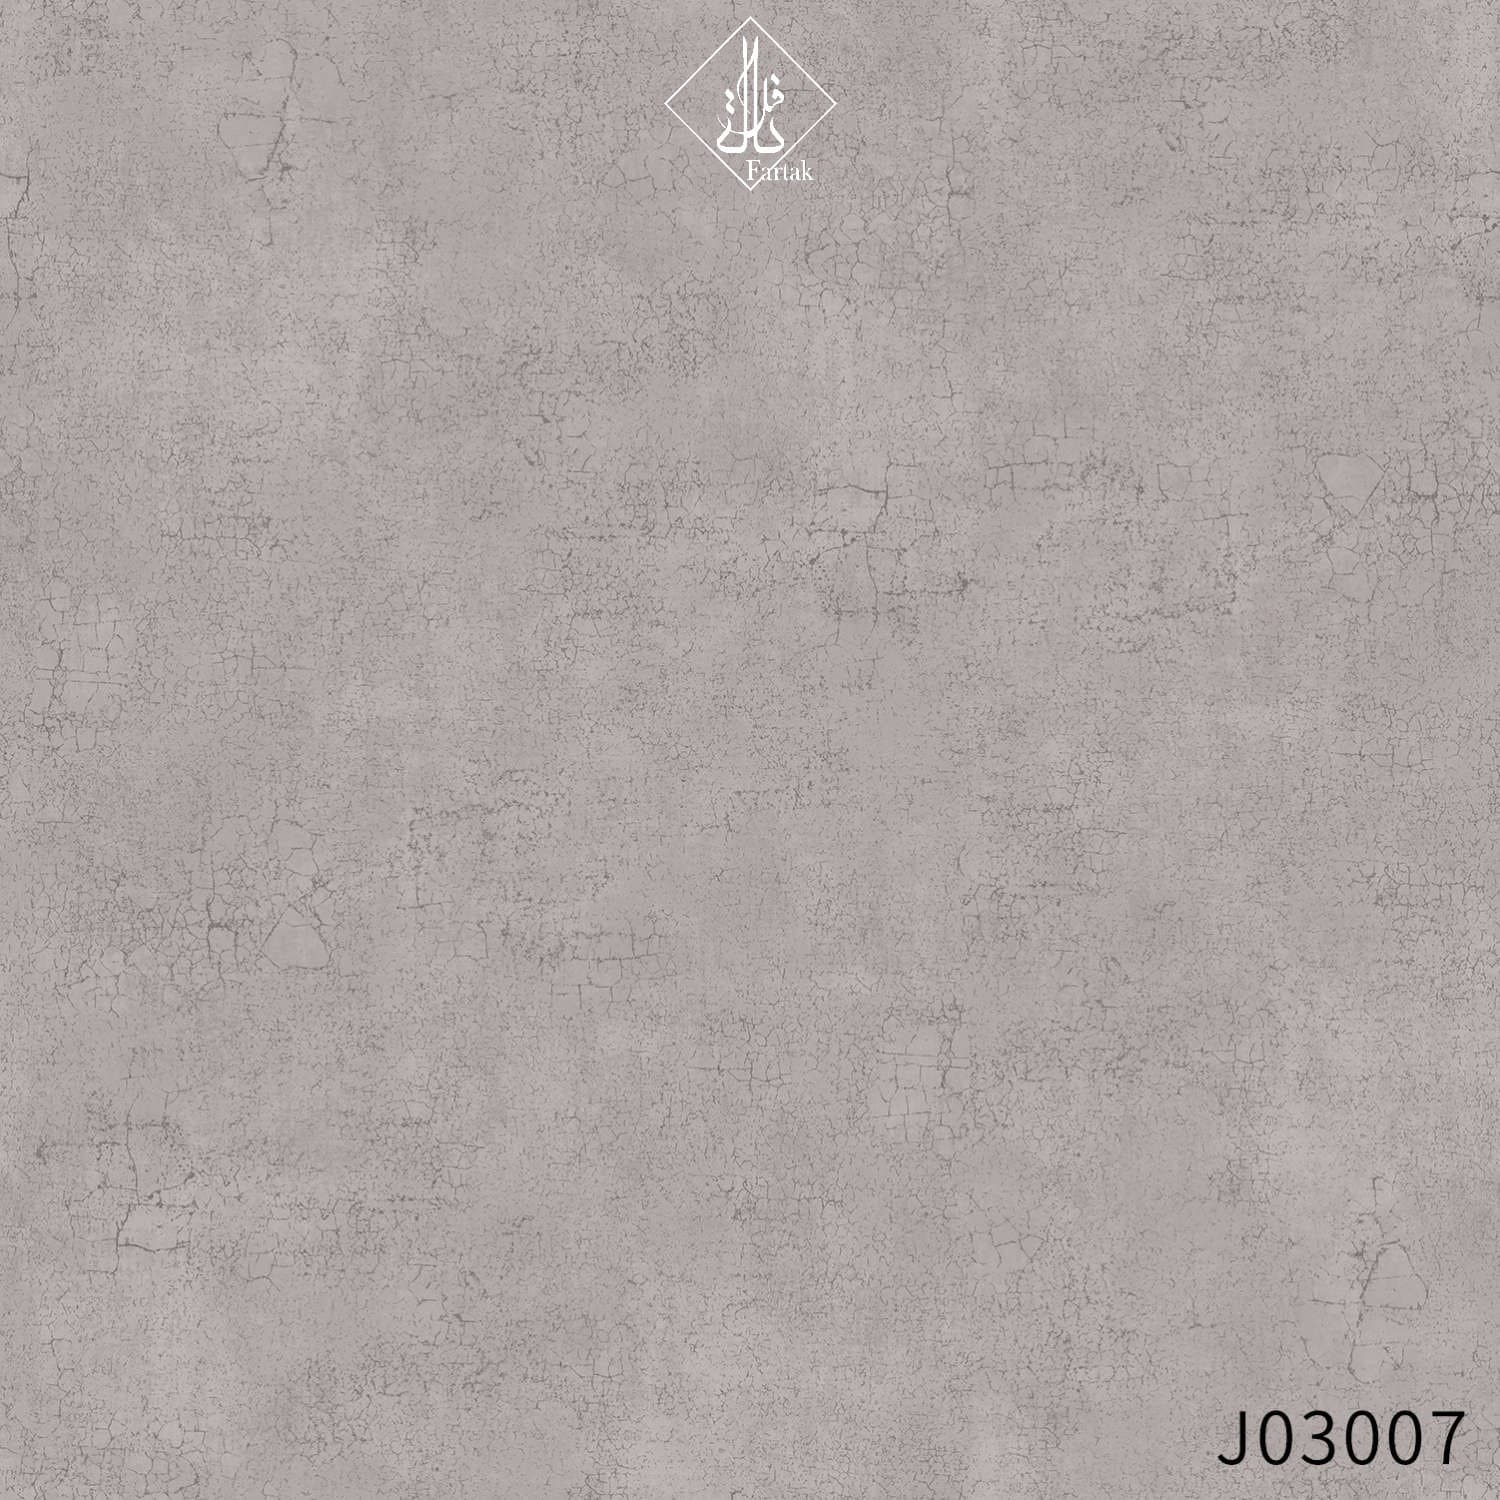 آلبوم کاغذ دیواری گلد کد j03007